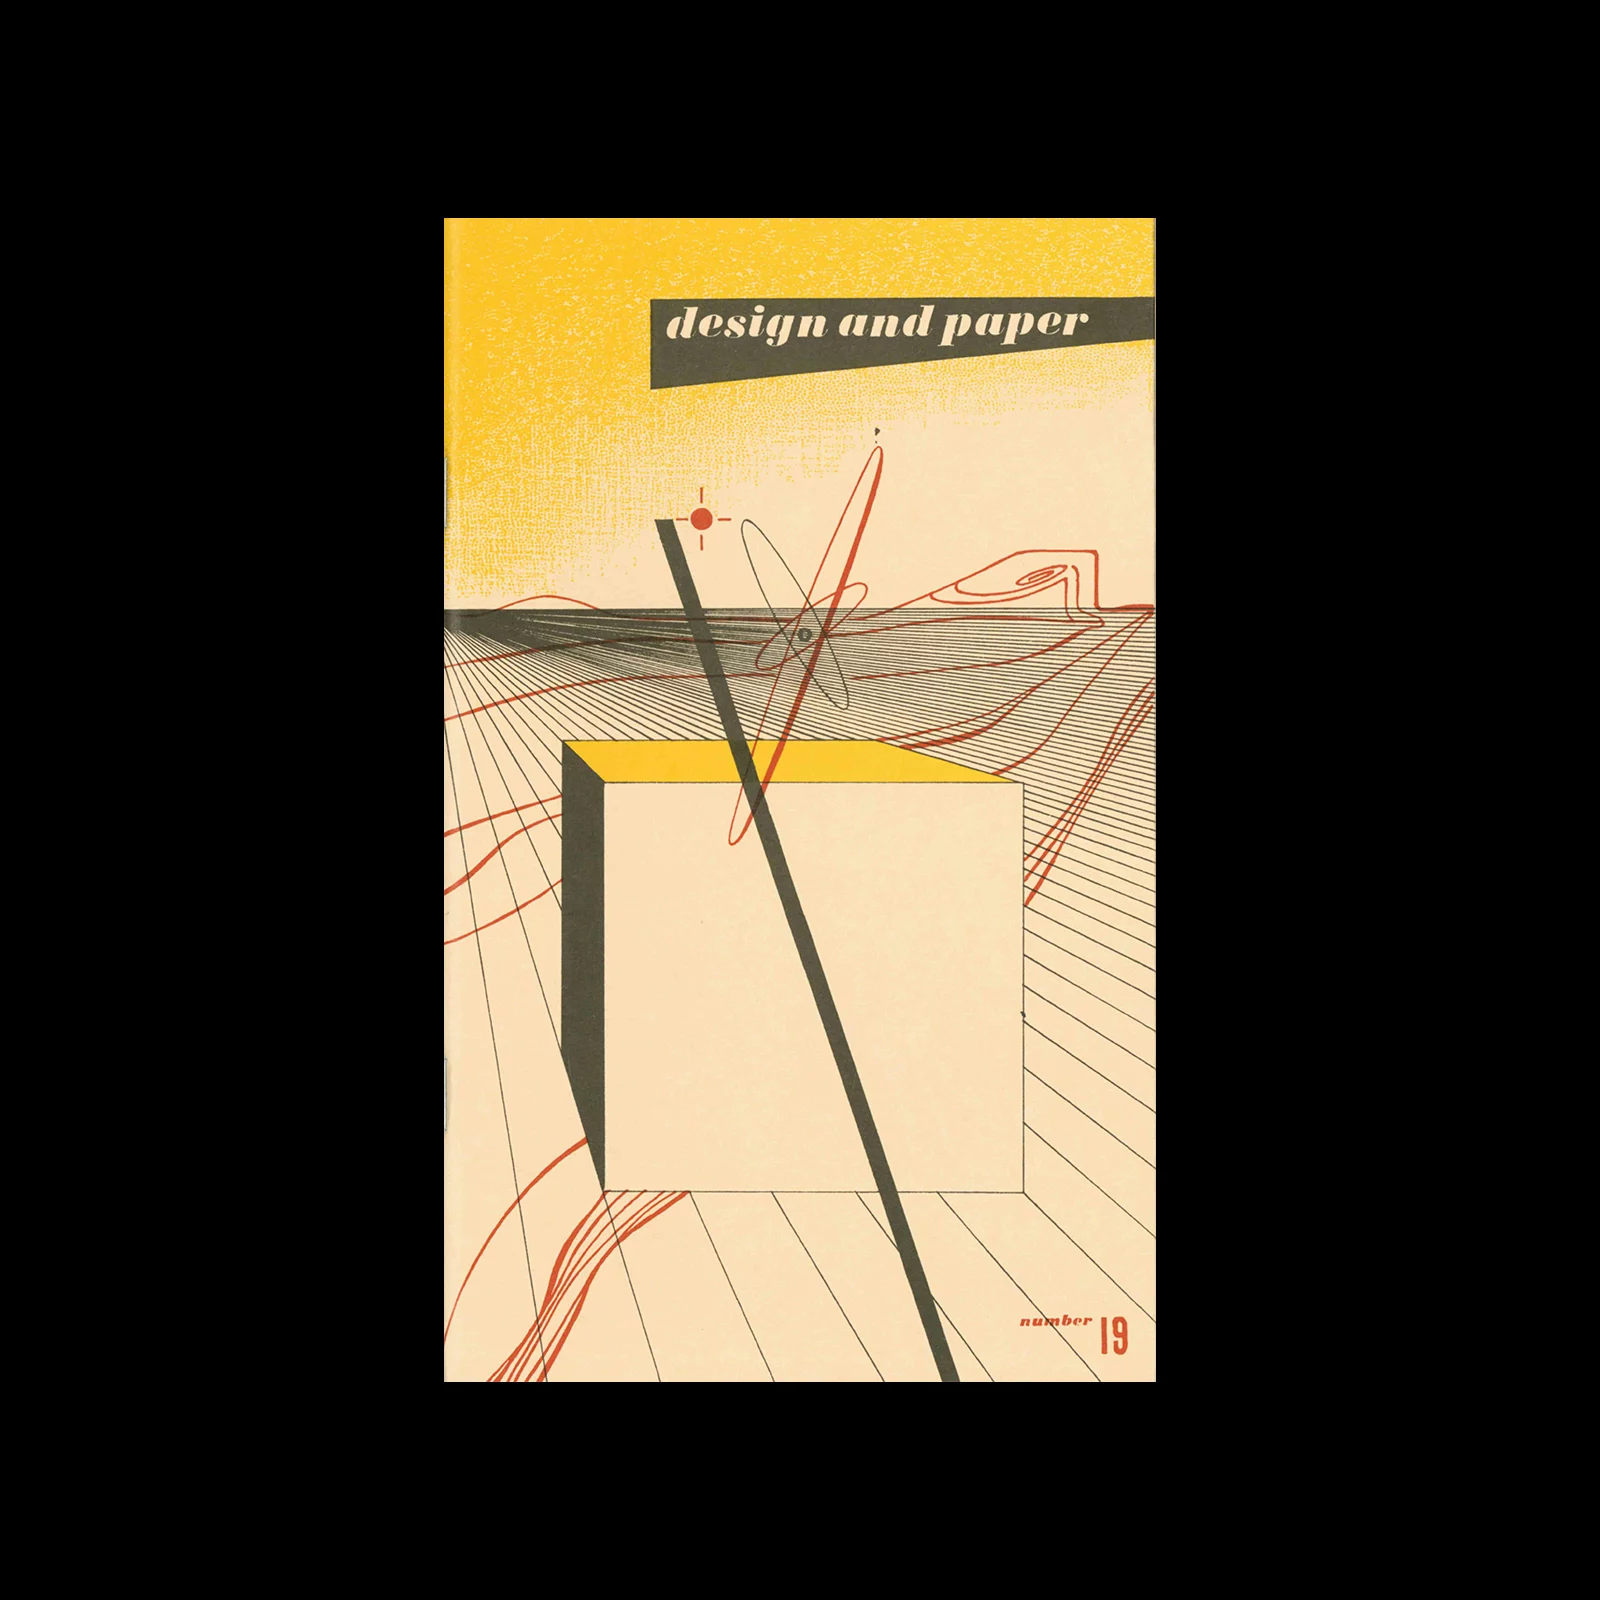 Shape, Line and Color. Design and Paper 19, Ladislav Sutnar, Reprint 2003